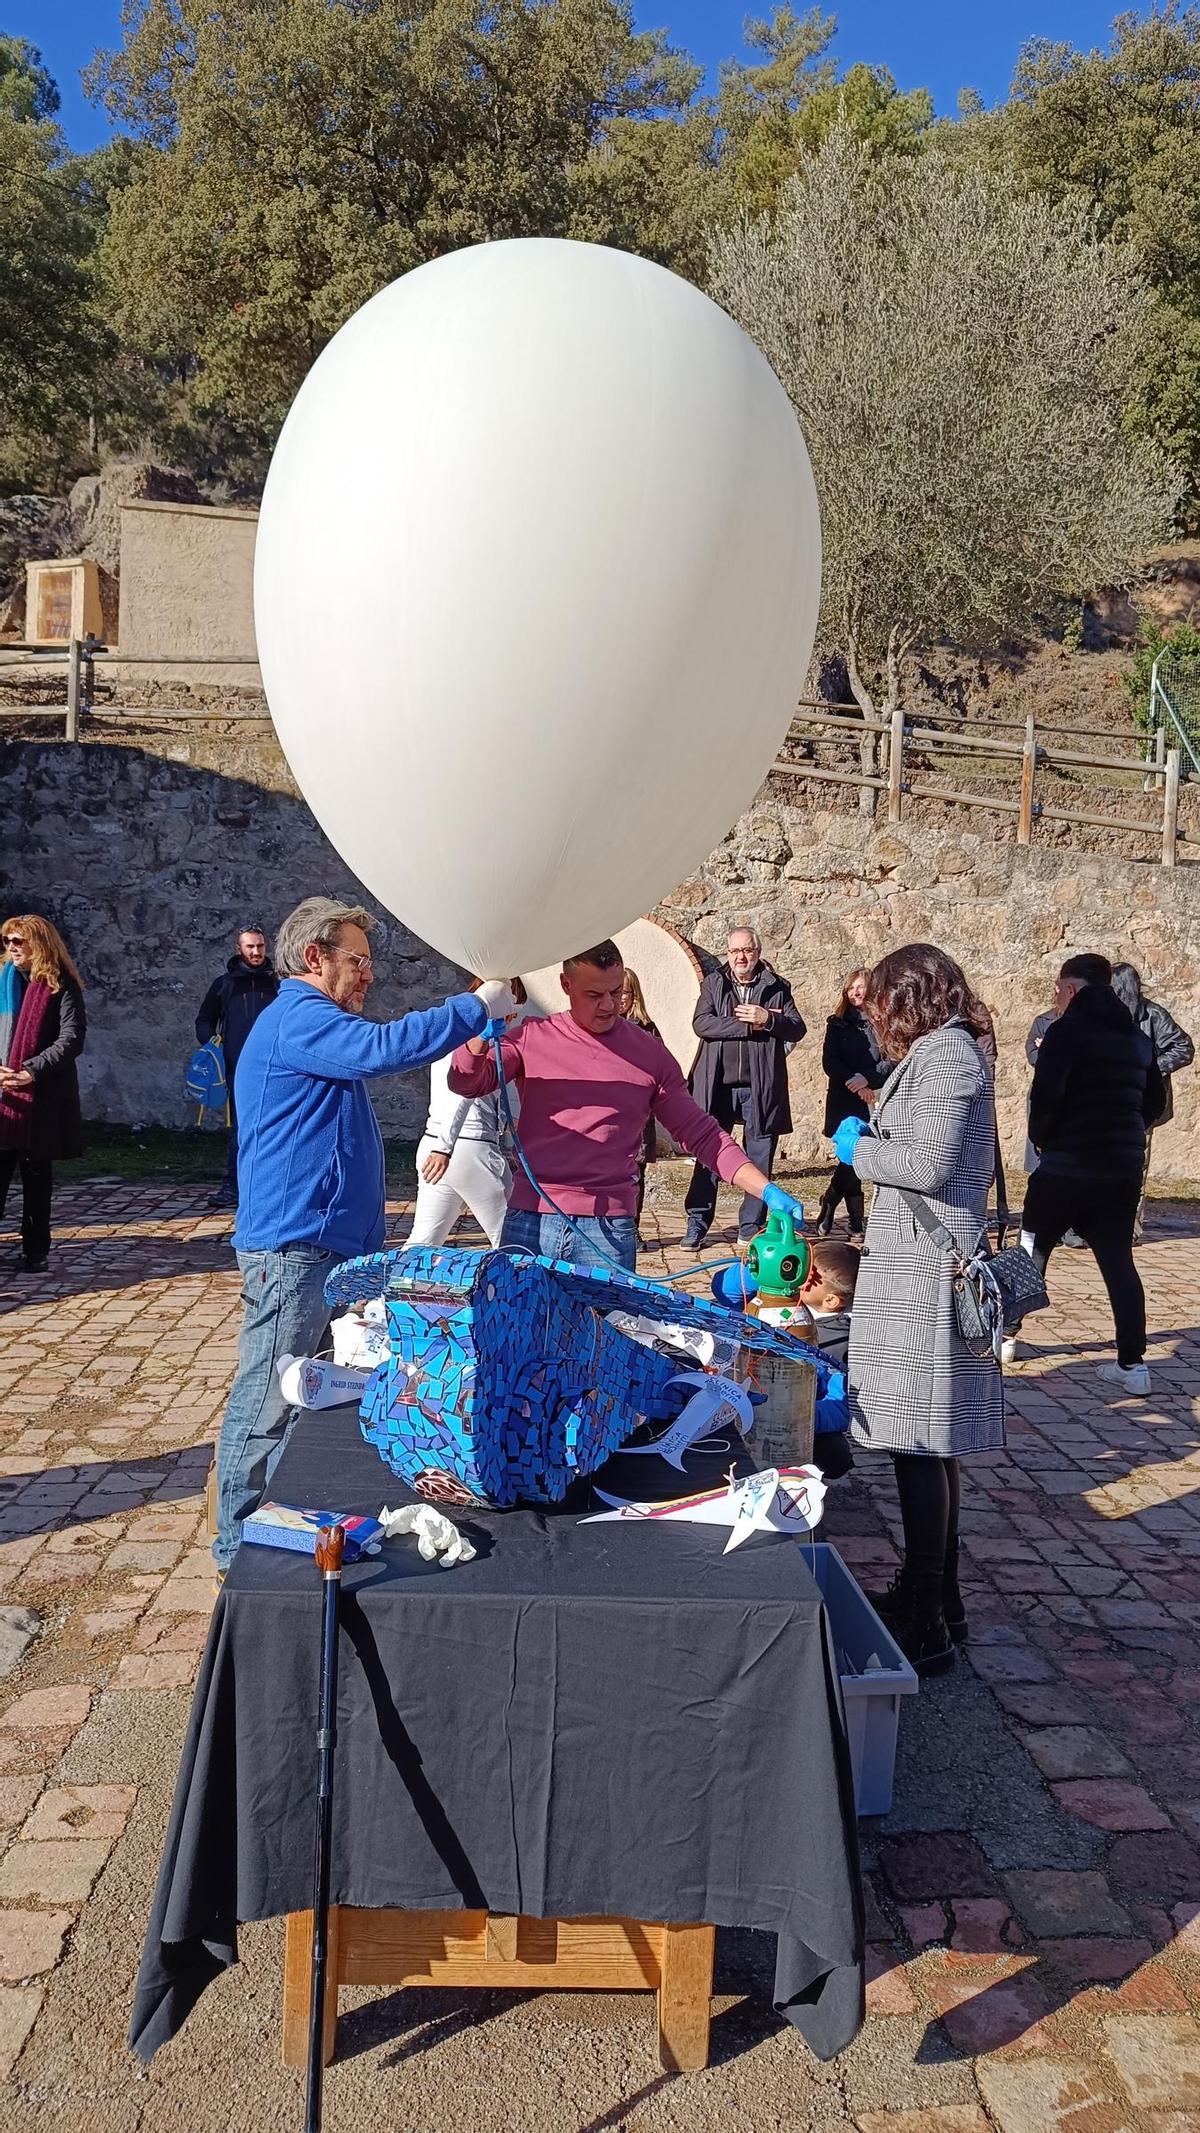 Globus d'heli per fer volar l'oreneta